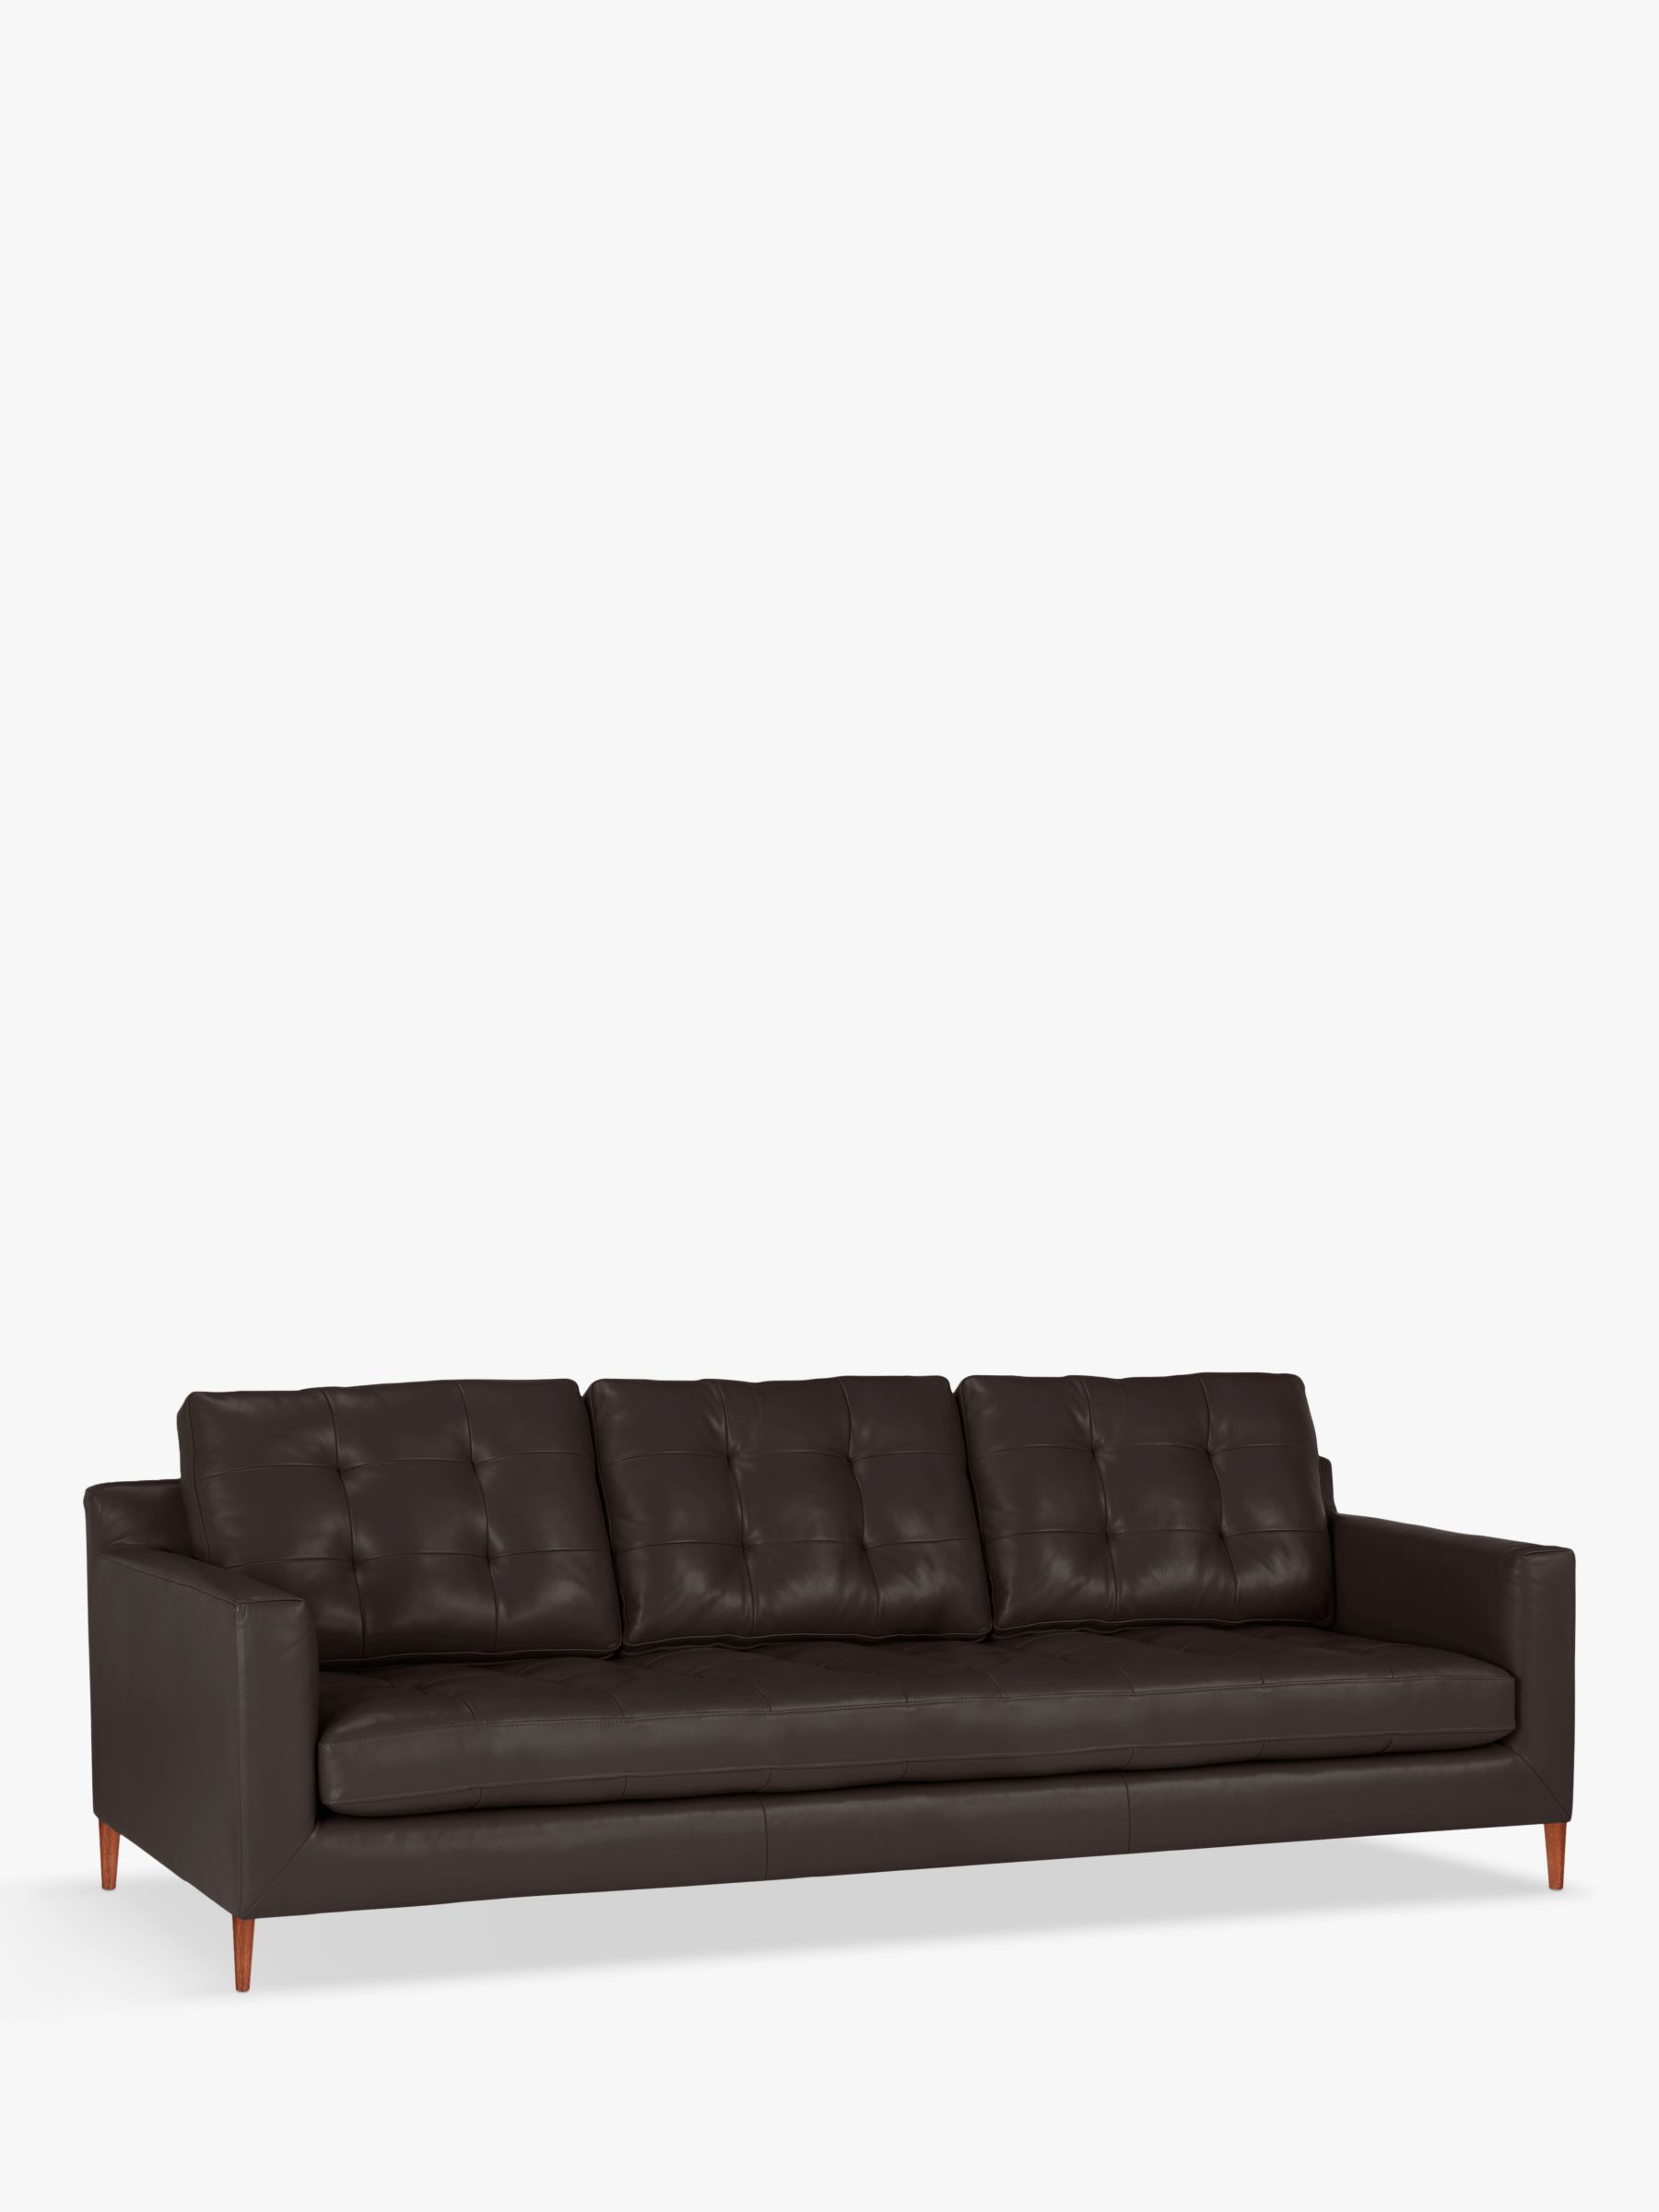 John Lewis Draper Leather Grand 4 Seater Sofa, Dark Leg